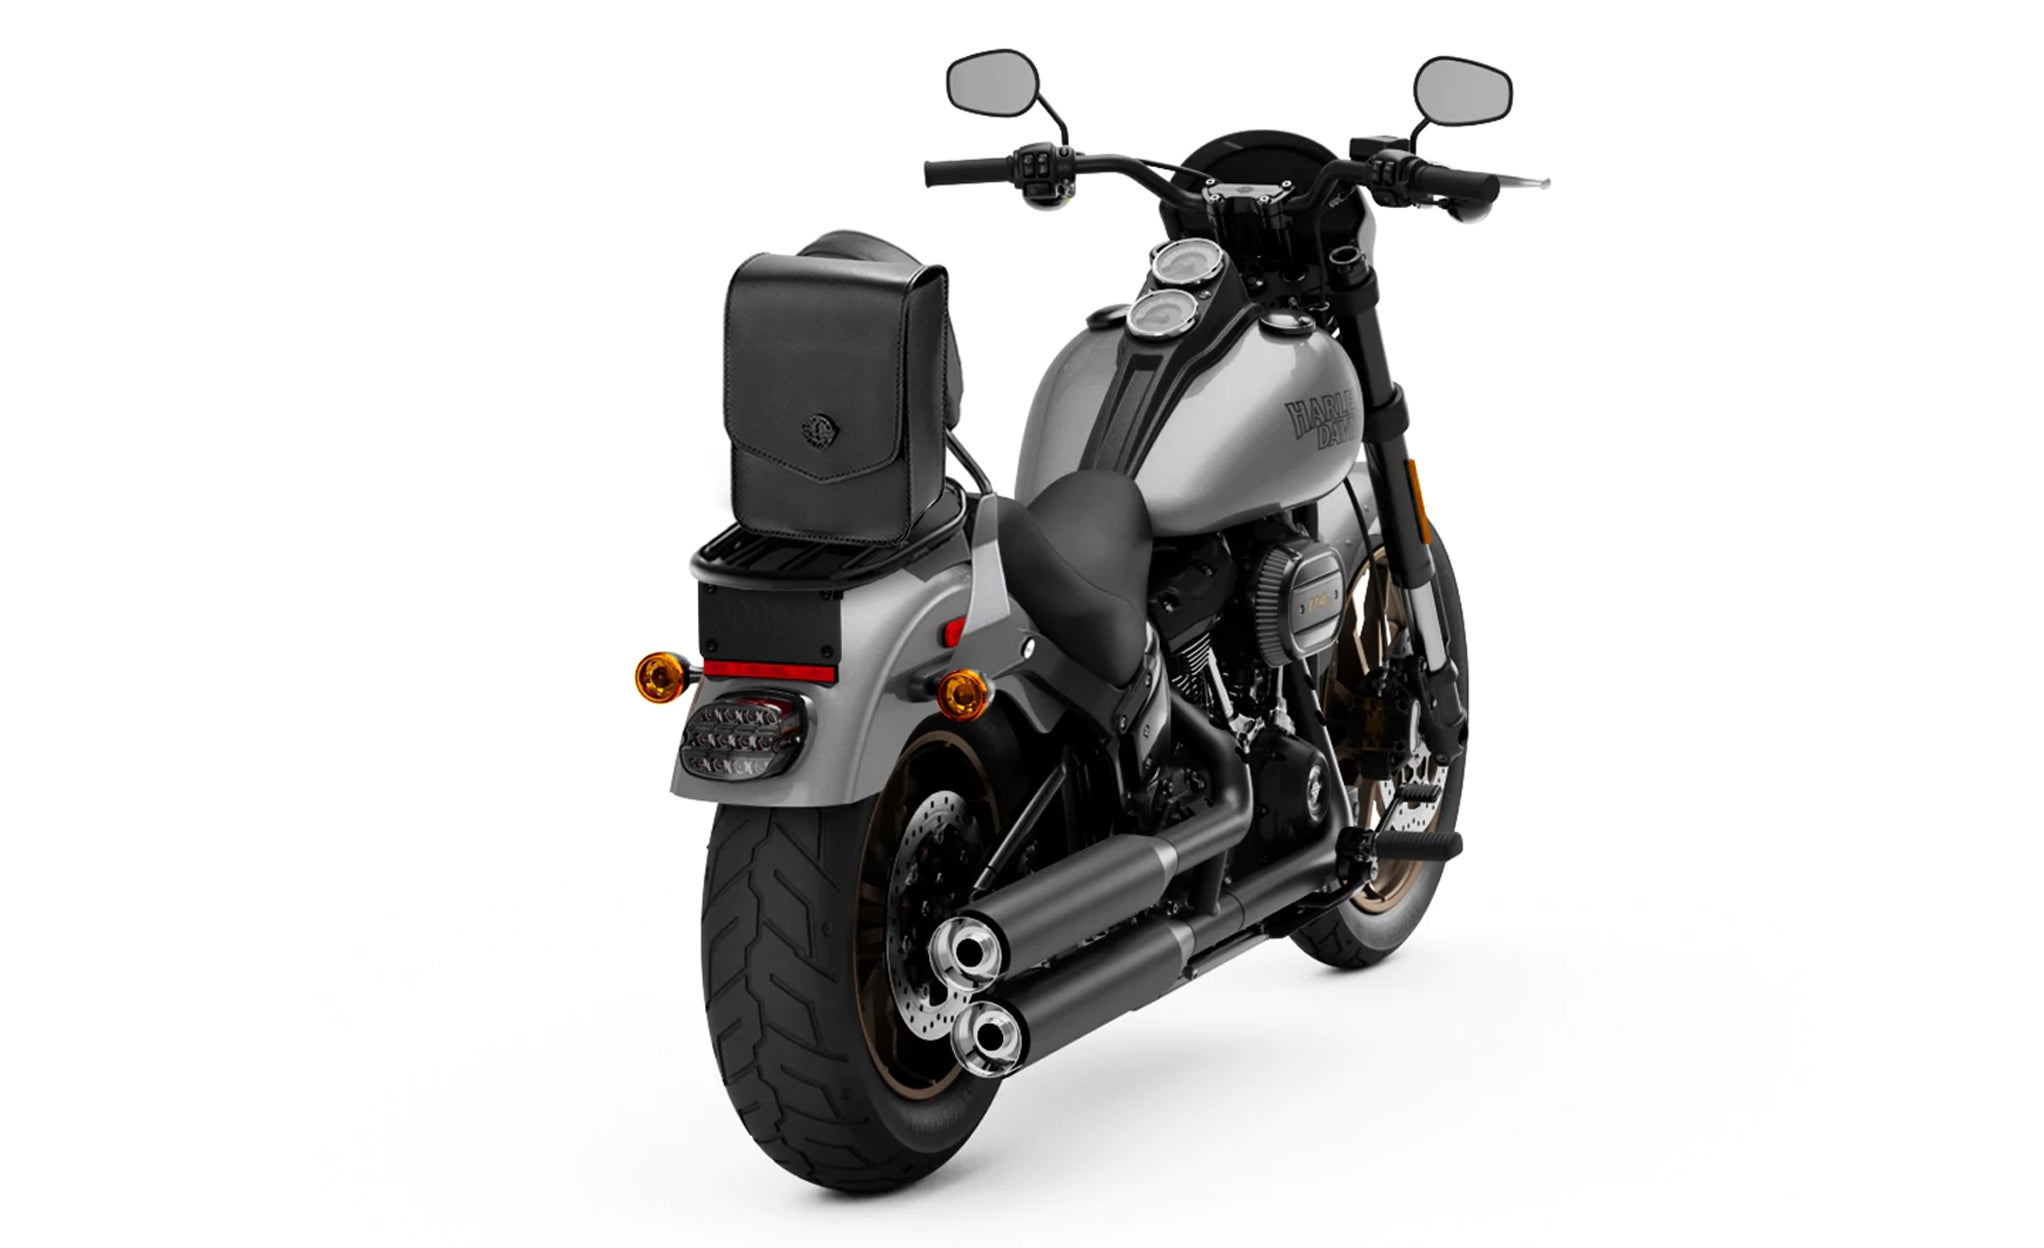 Viking Dark Age Small Motorcycle Sissy Bar Bag for Harley Davidson Bag on Bike View @expand